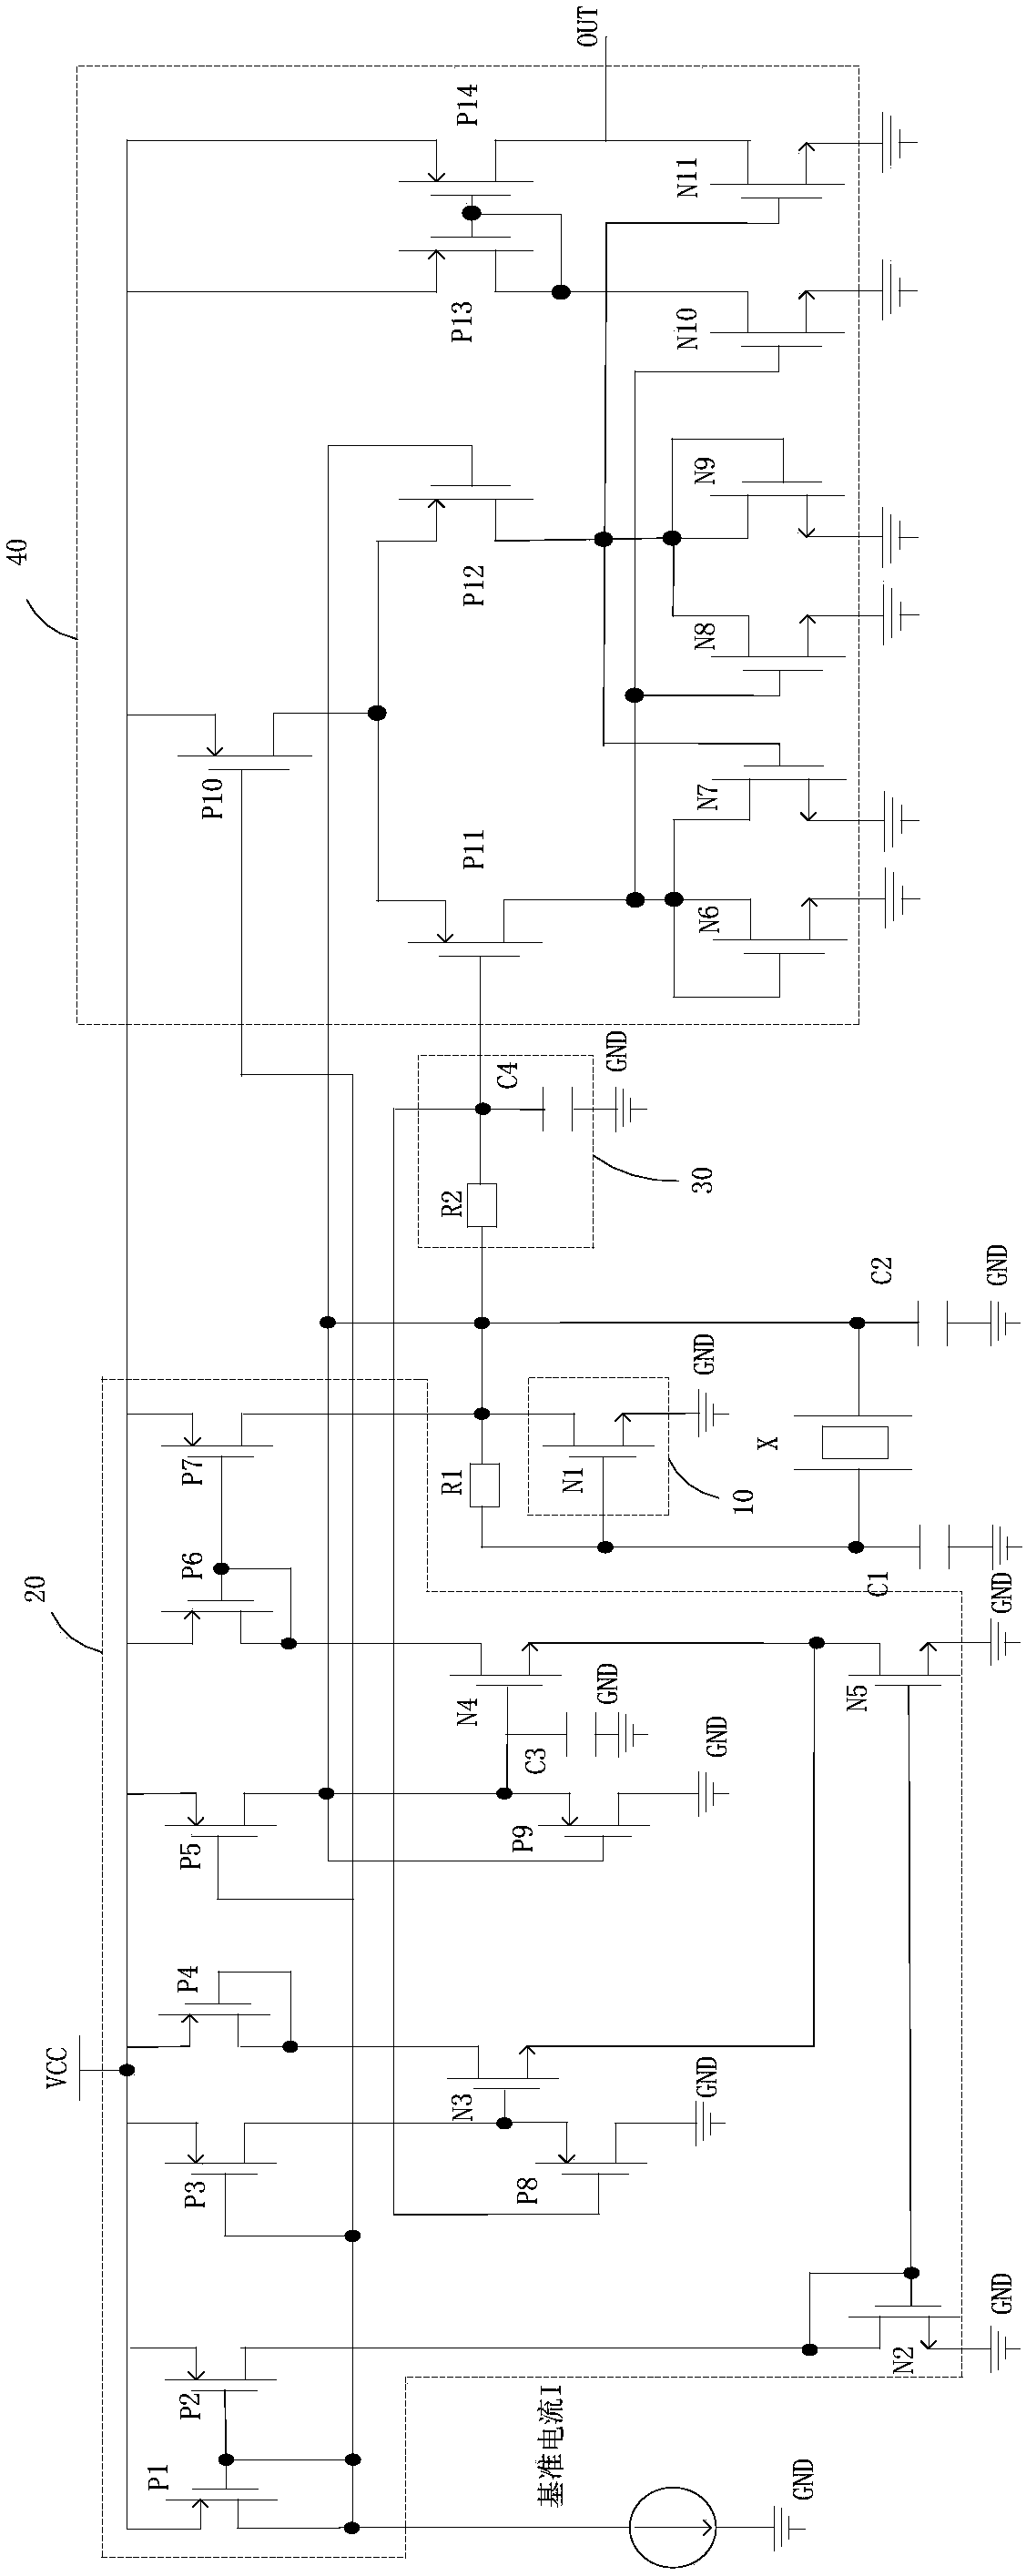 Oscillation circuit